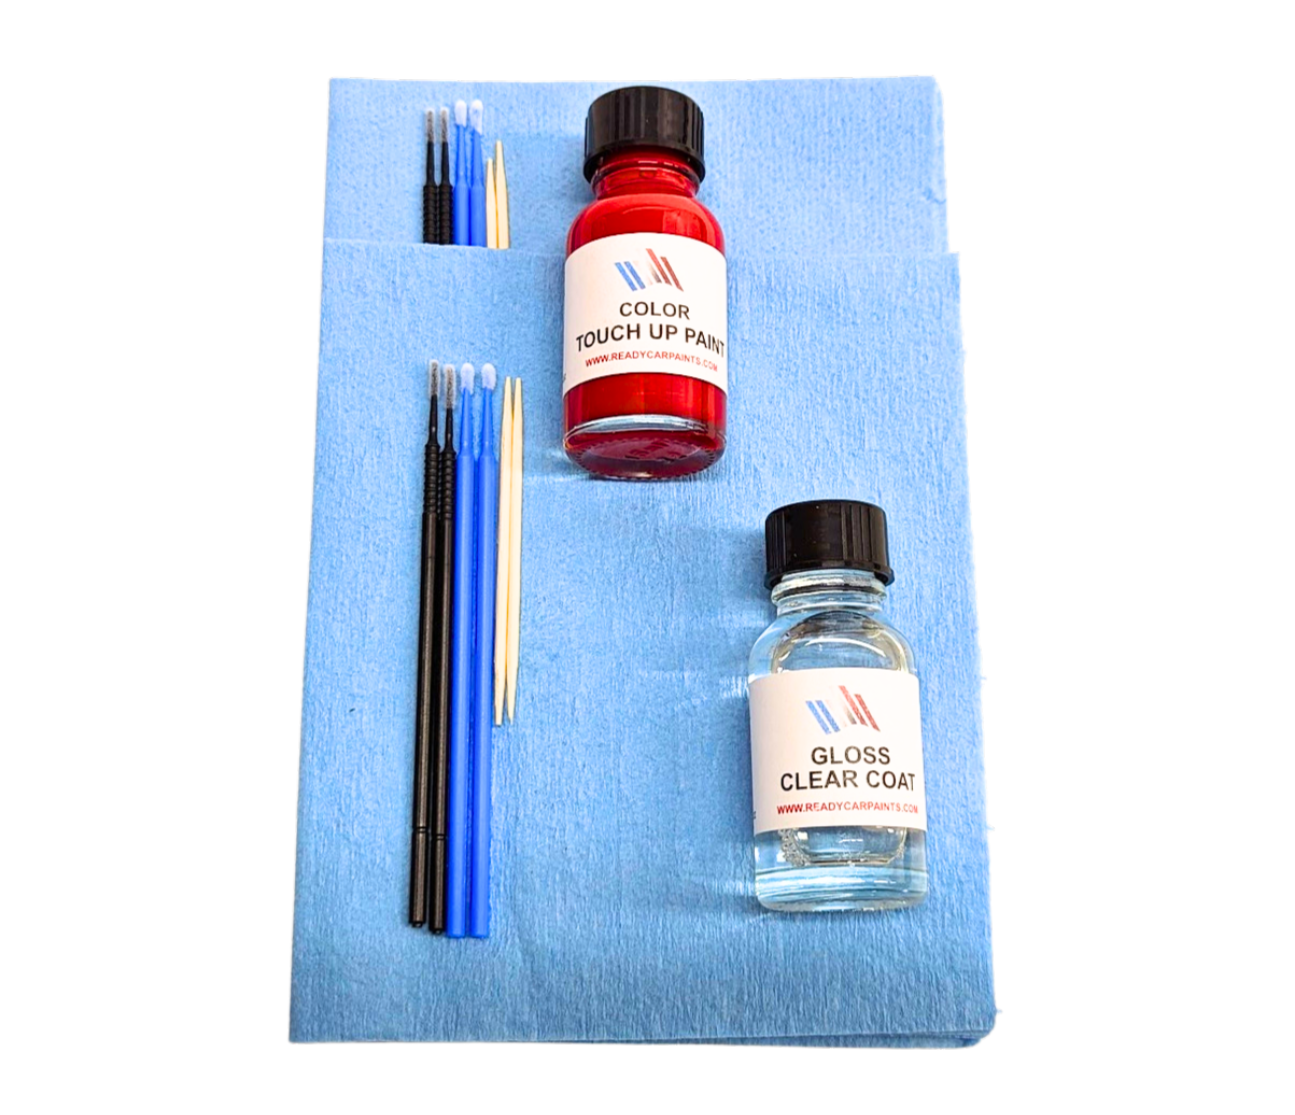 FORD M7134A/P3 Windveil Blue Metallic Touch Up Paint Kit 100% OEM Color Match